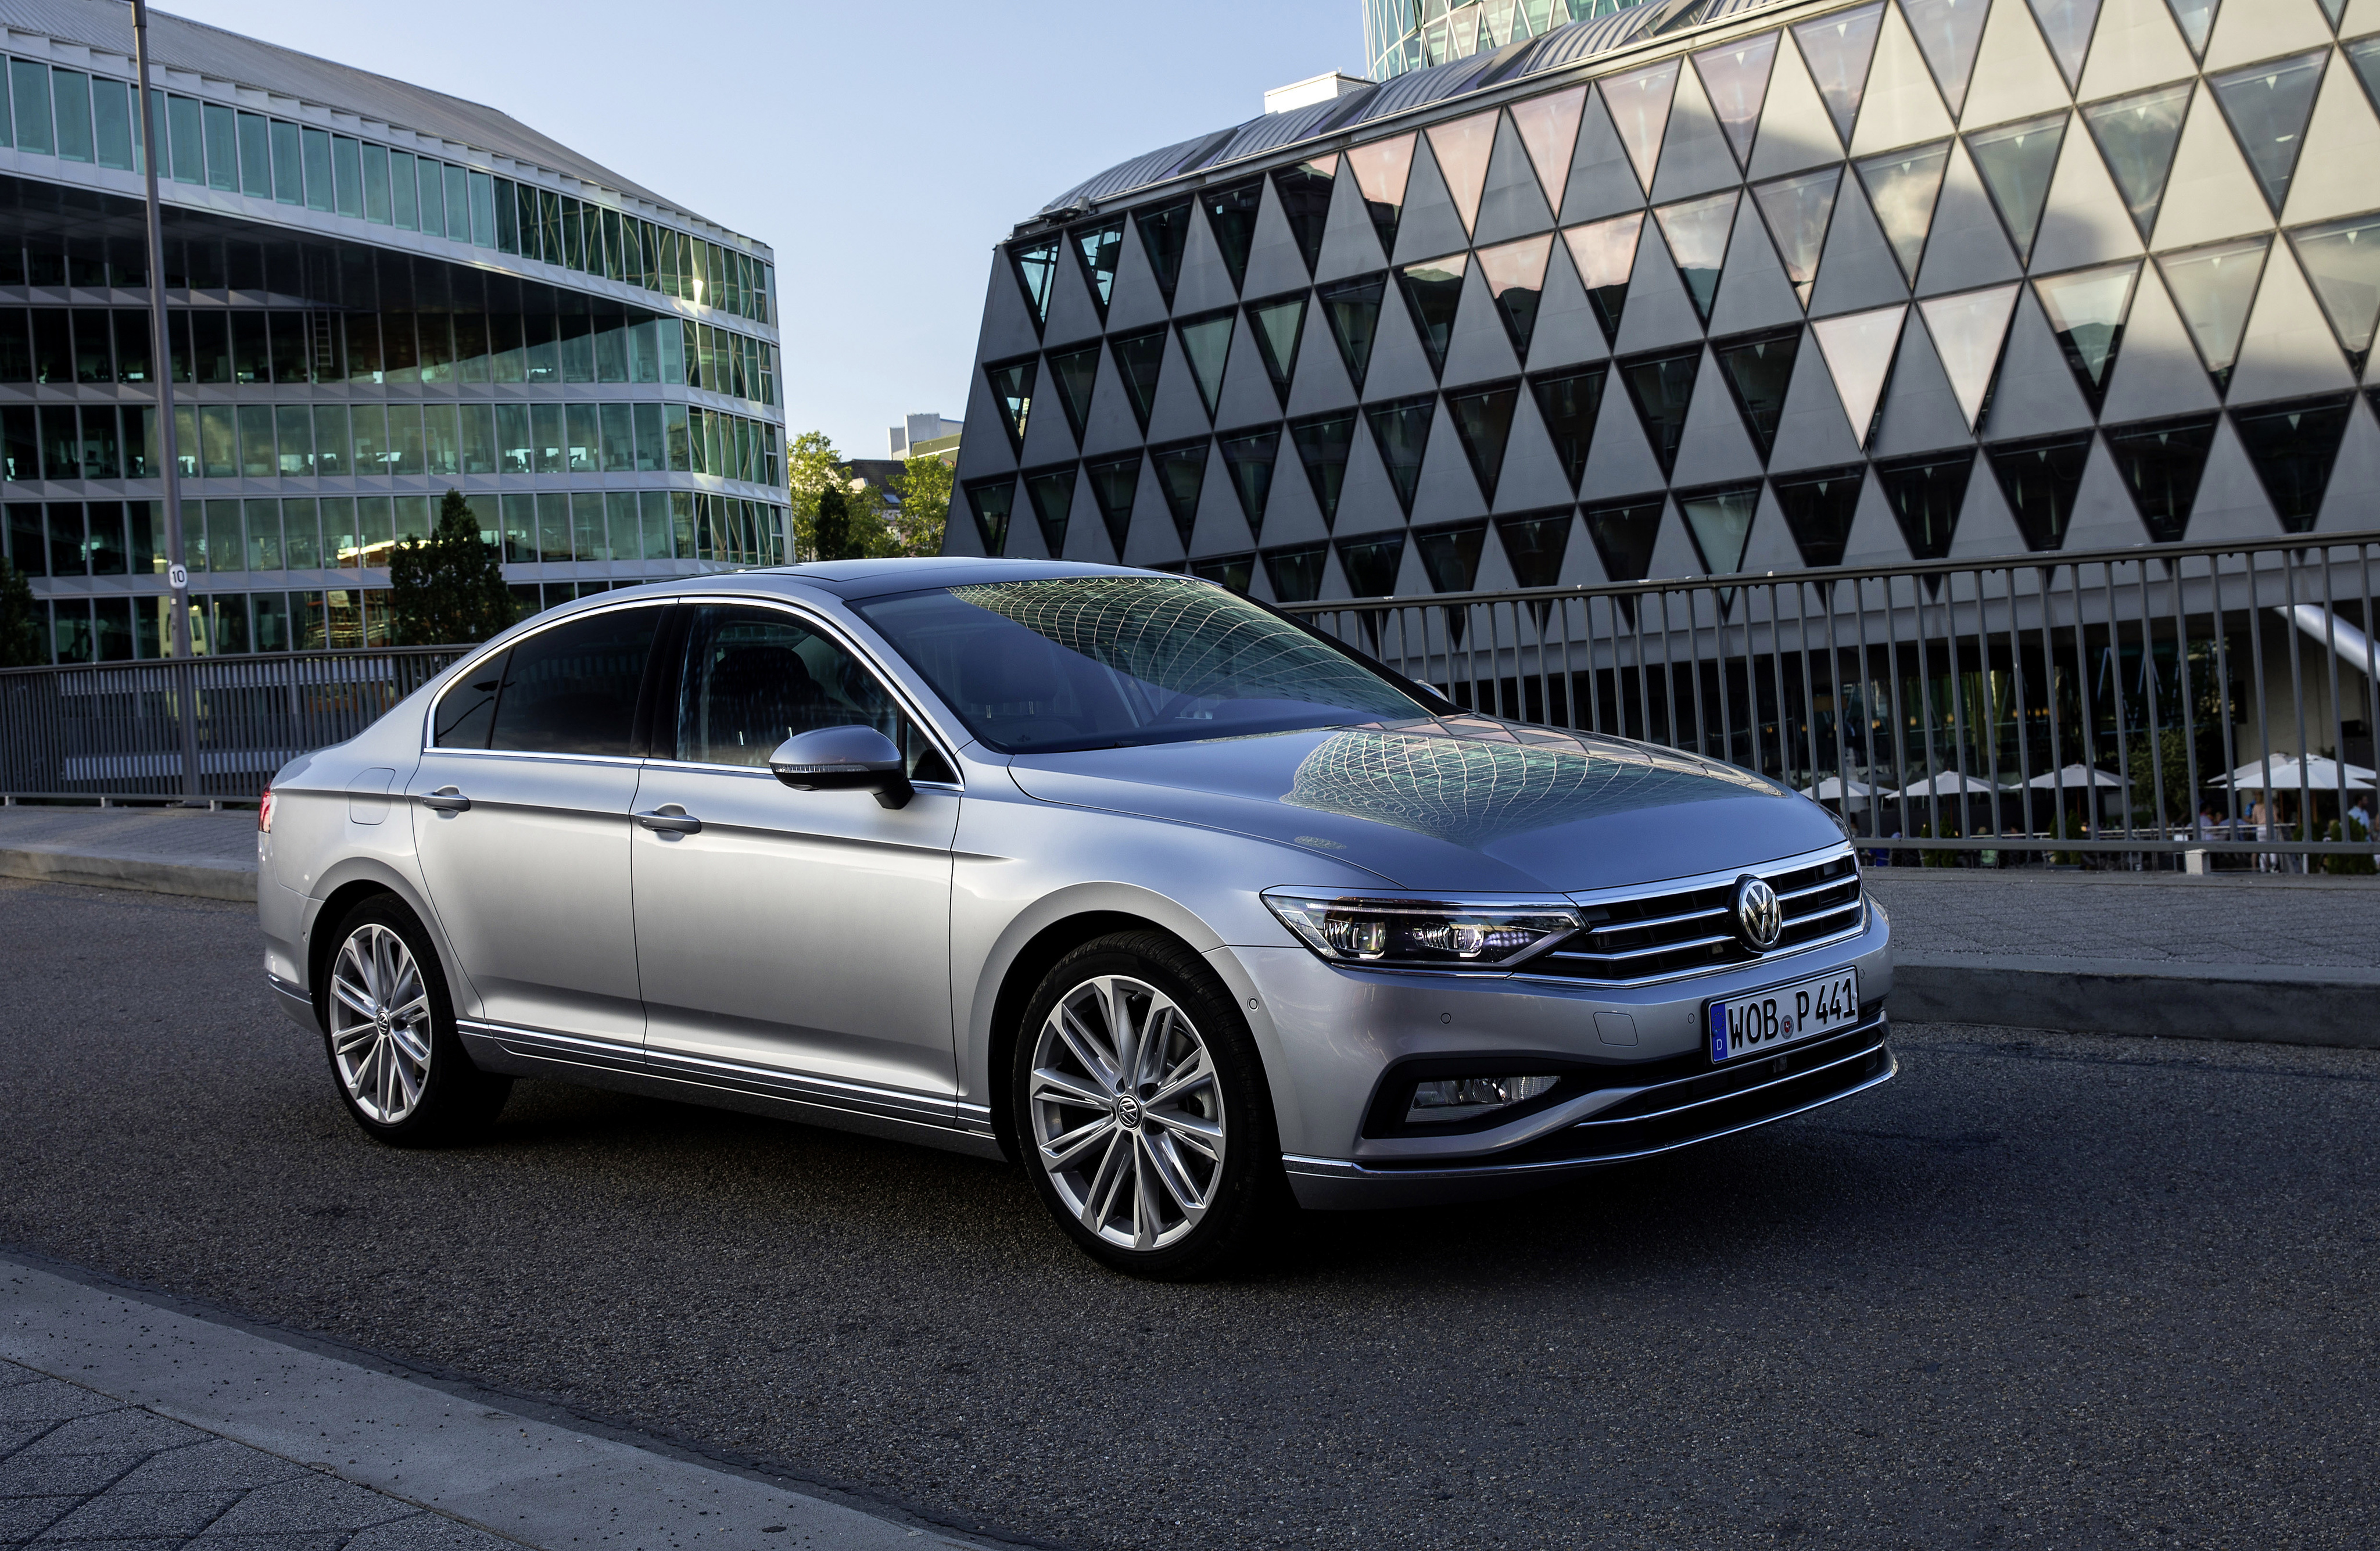 Nowy Passat bestseller Volkswagena już w sprzedaży